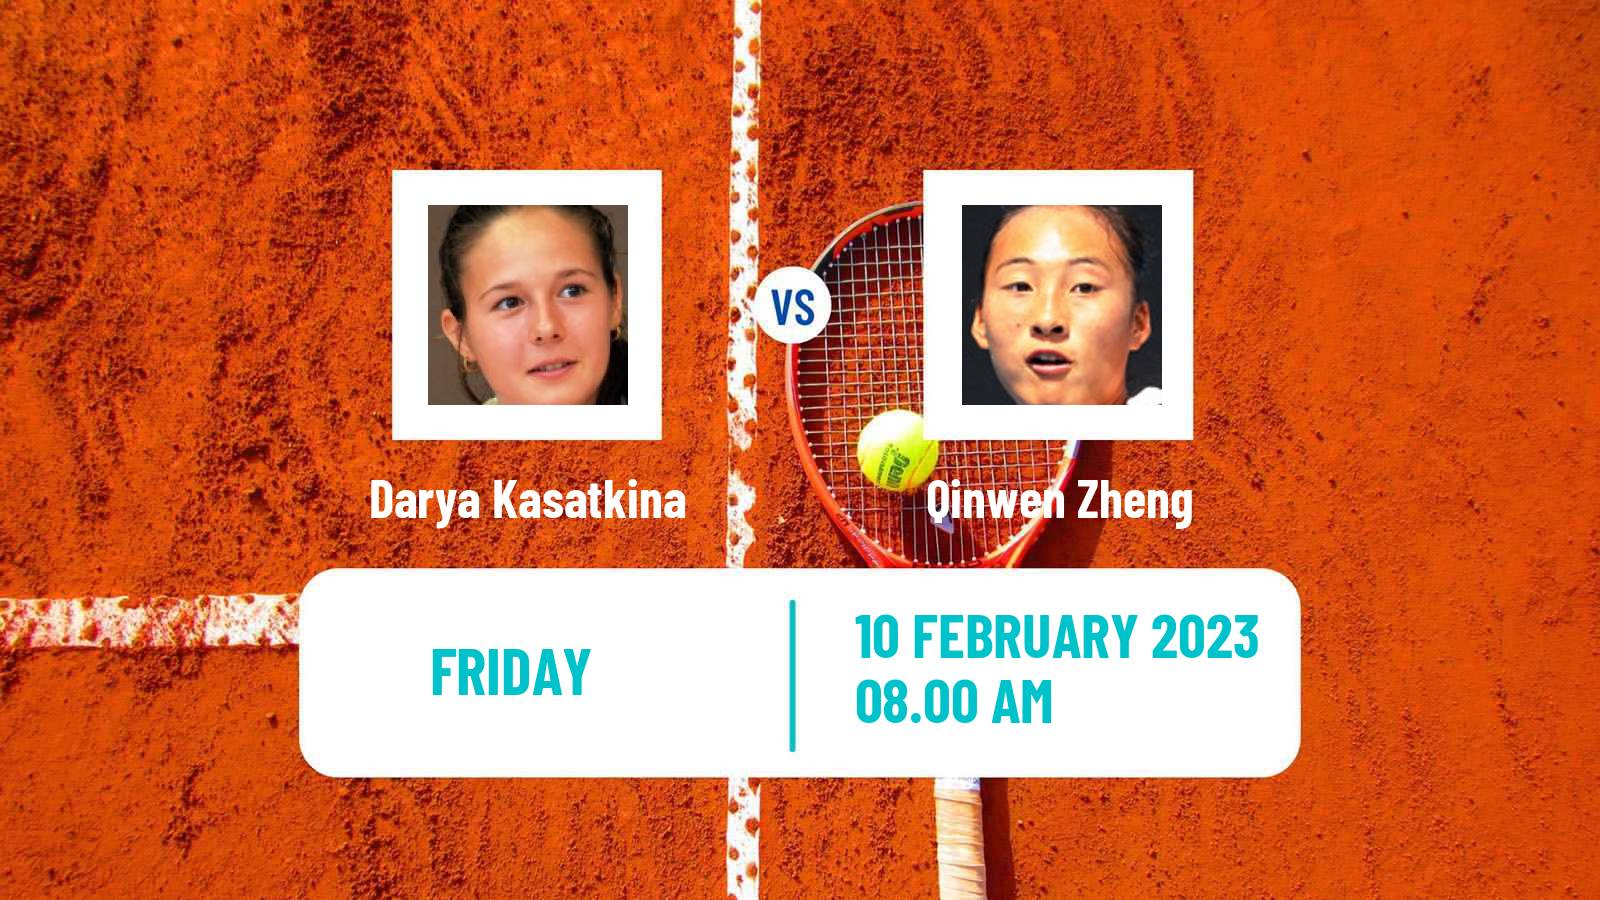 Tennis WTA Abu Dhabi Darya Kasatkina - Qinwen Zheng